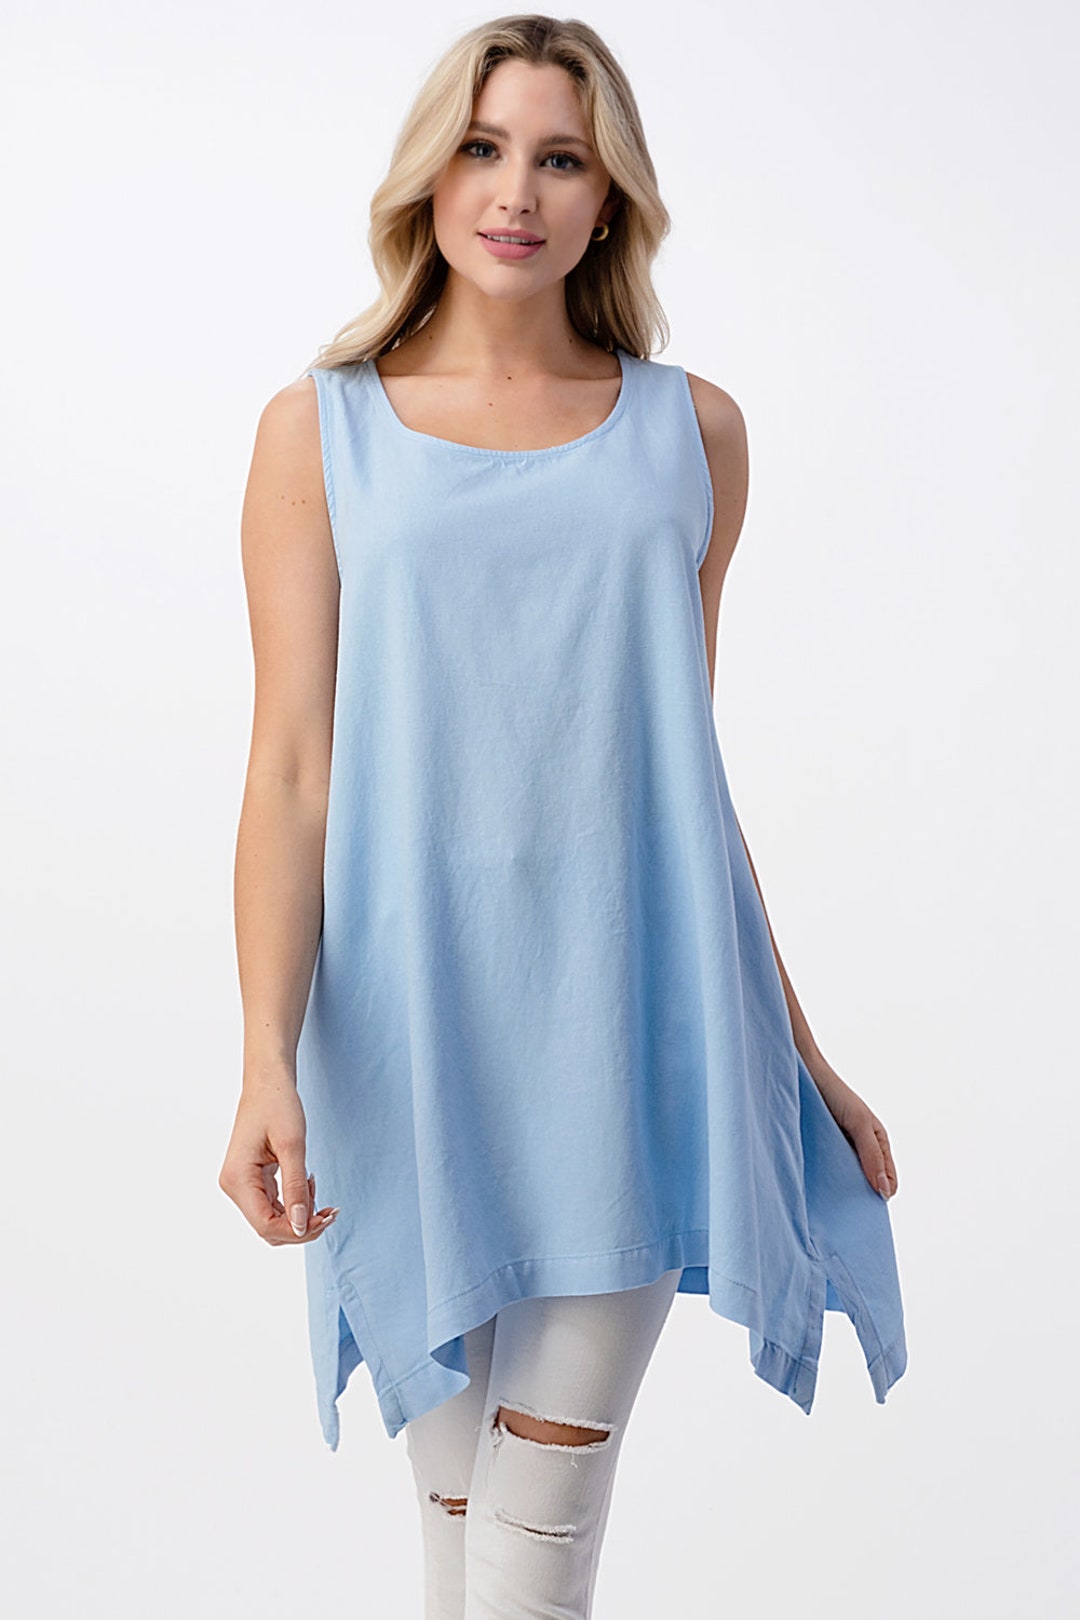 Light Blue Linen Shirt for Women Sleeveless Tunic With Side - Etsy